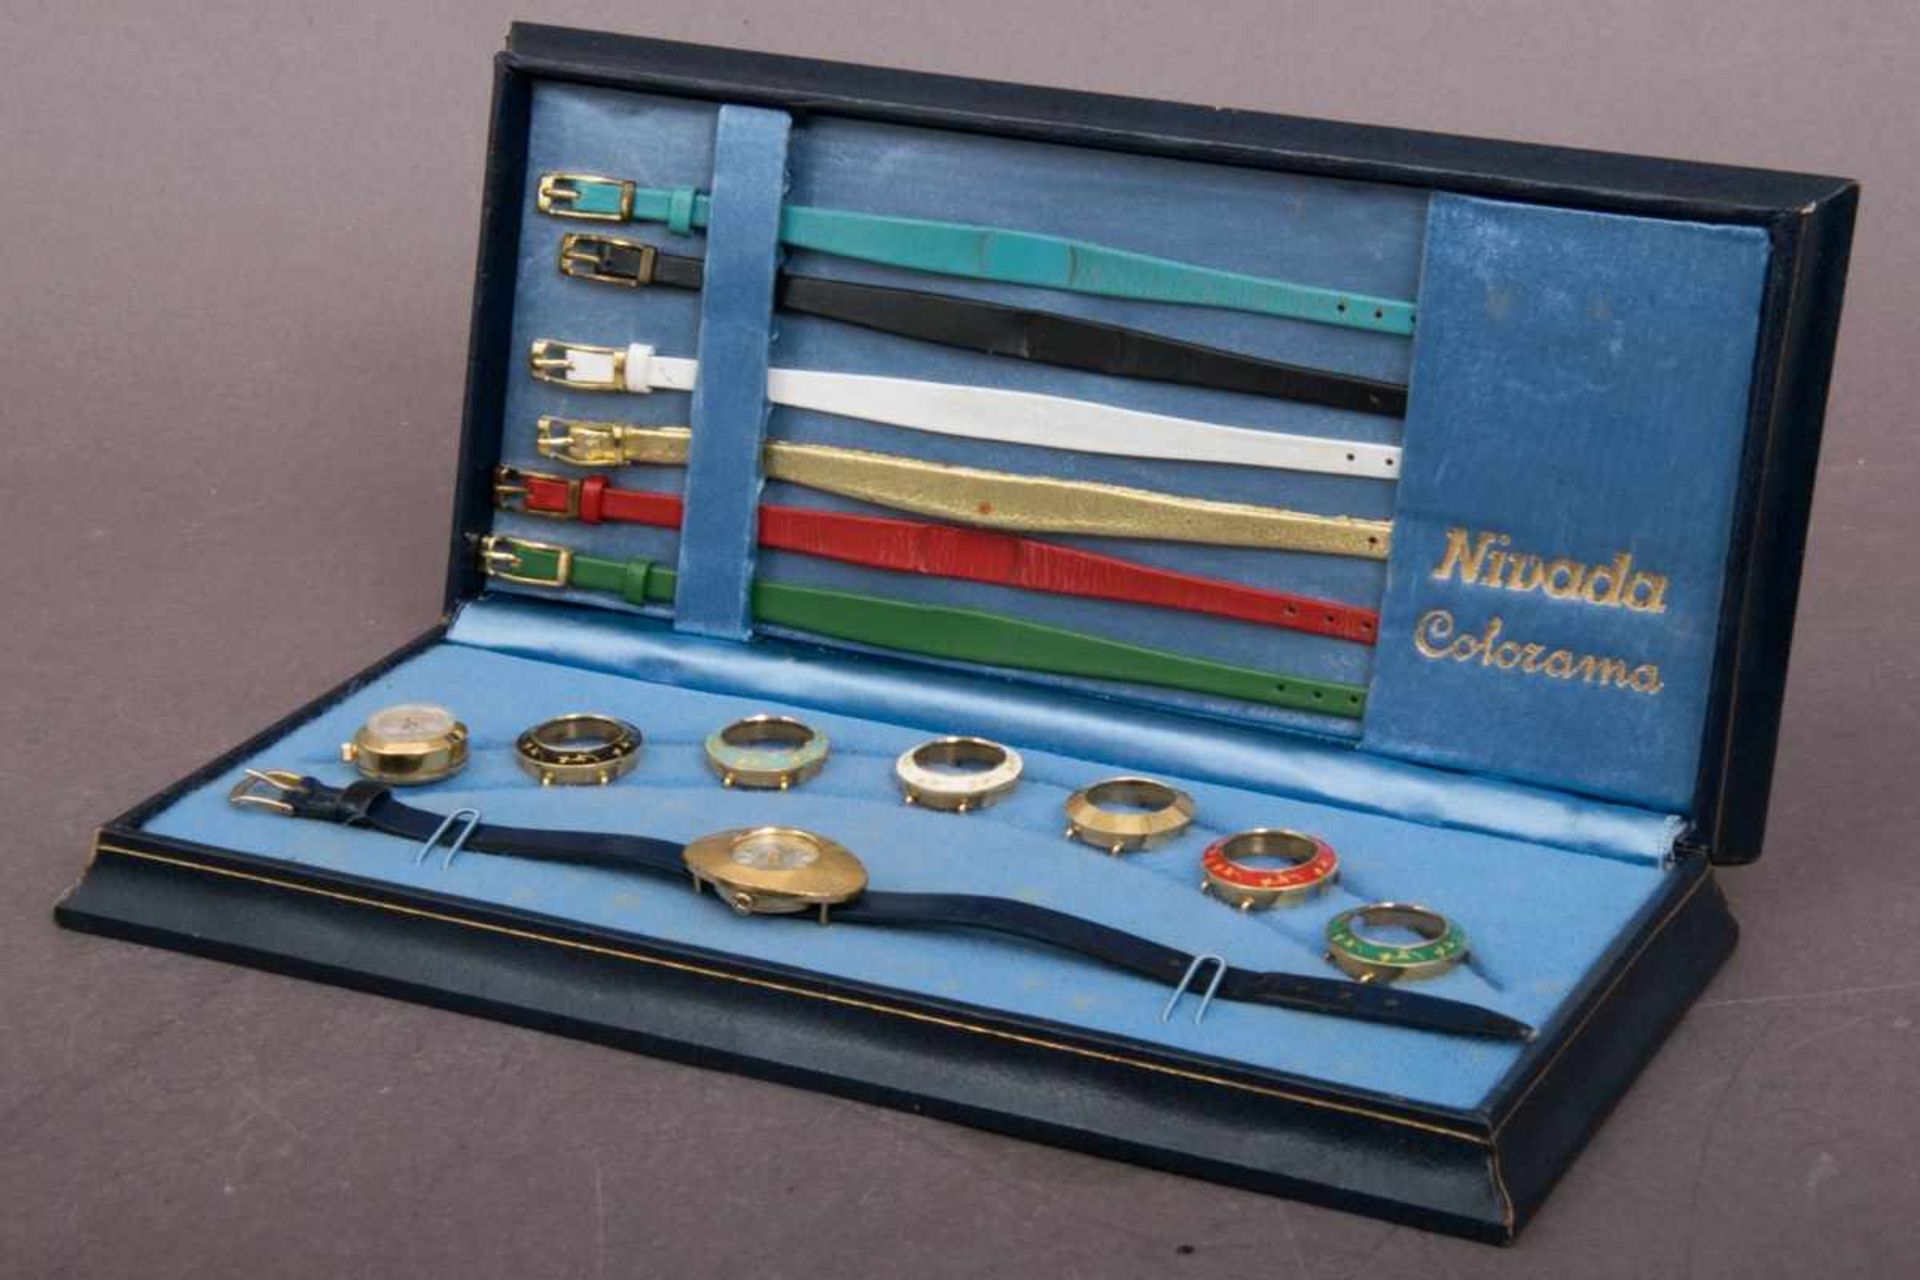 NIVADA "COLORAMA" Damenarmbanduhr der 1960er/70er Jahre, 2(!!!) vergoldete Damenuhren mit